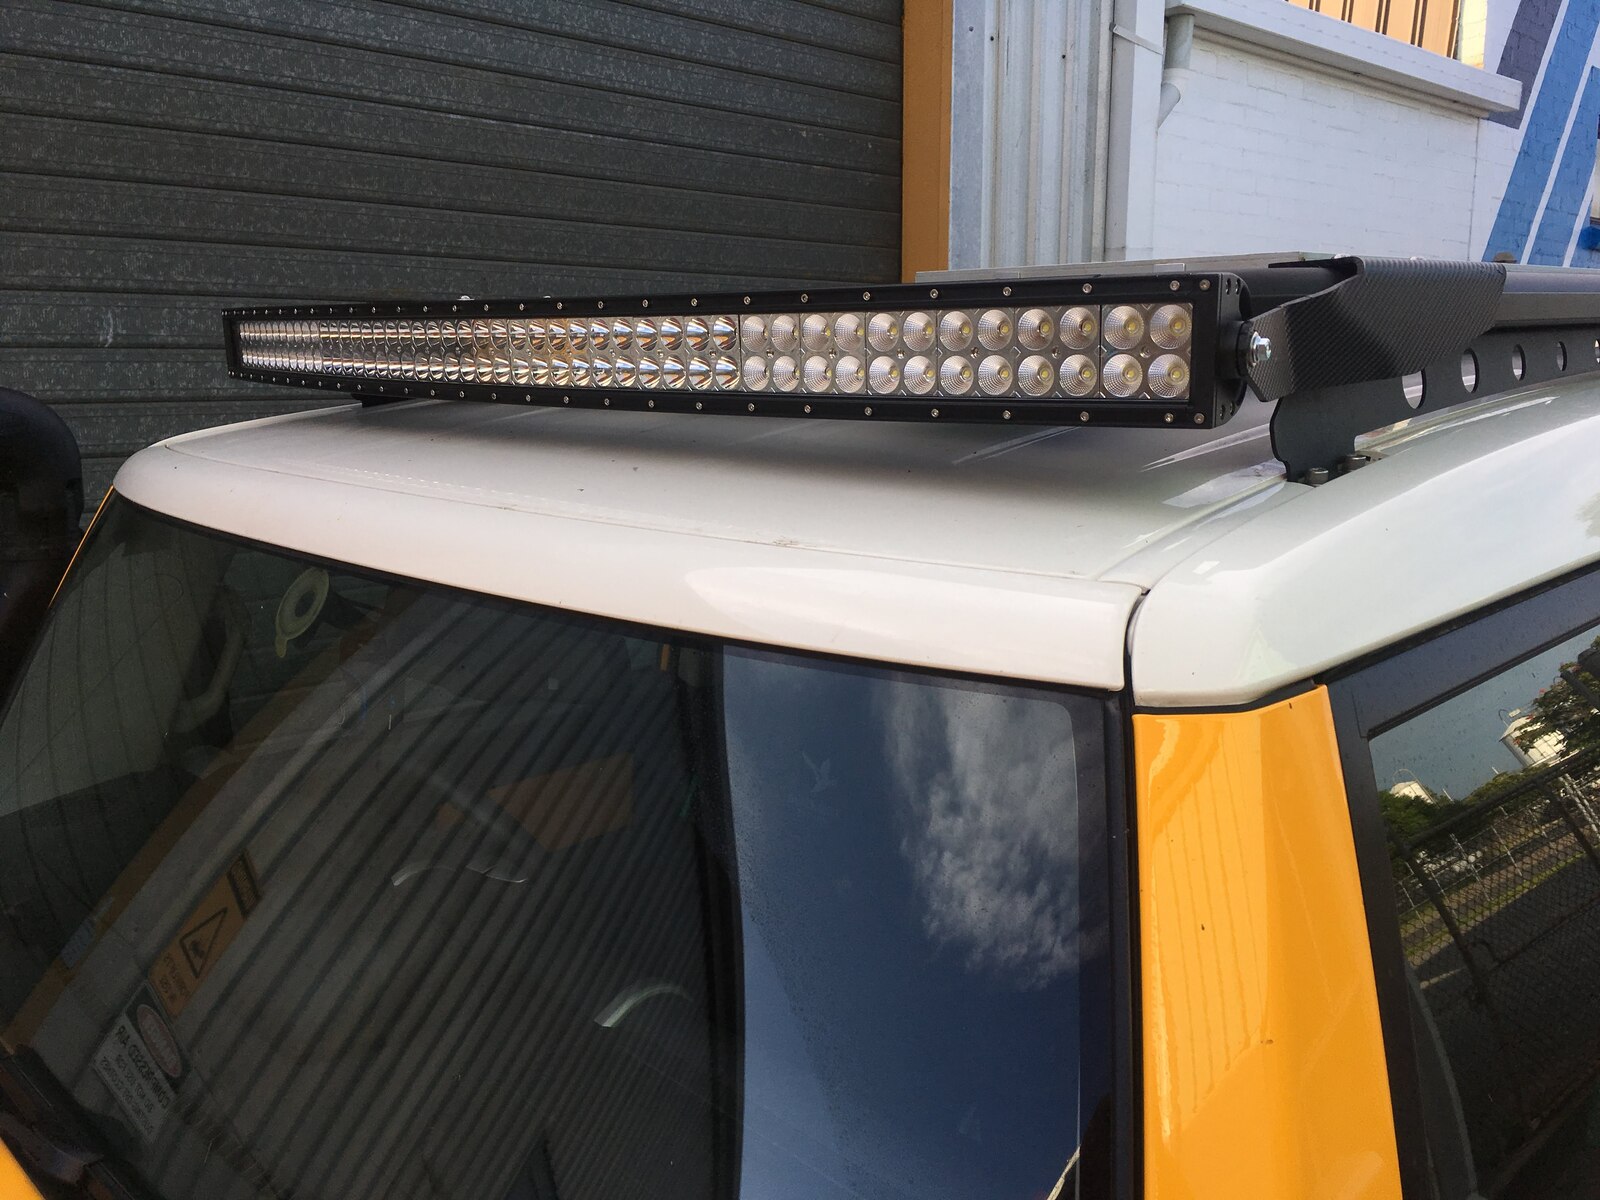 50" Curved LED Light Bar Brackets to suit Rhino Platform Rack 1236 wide